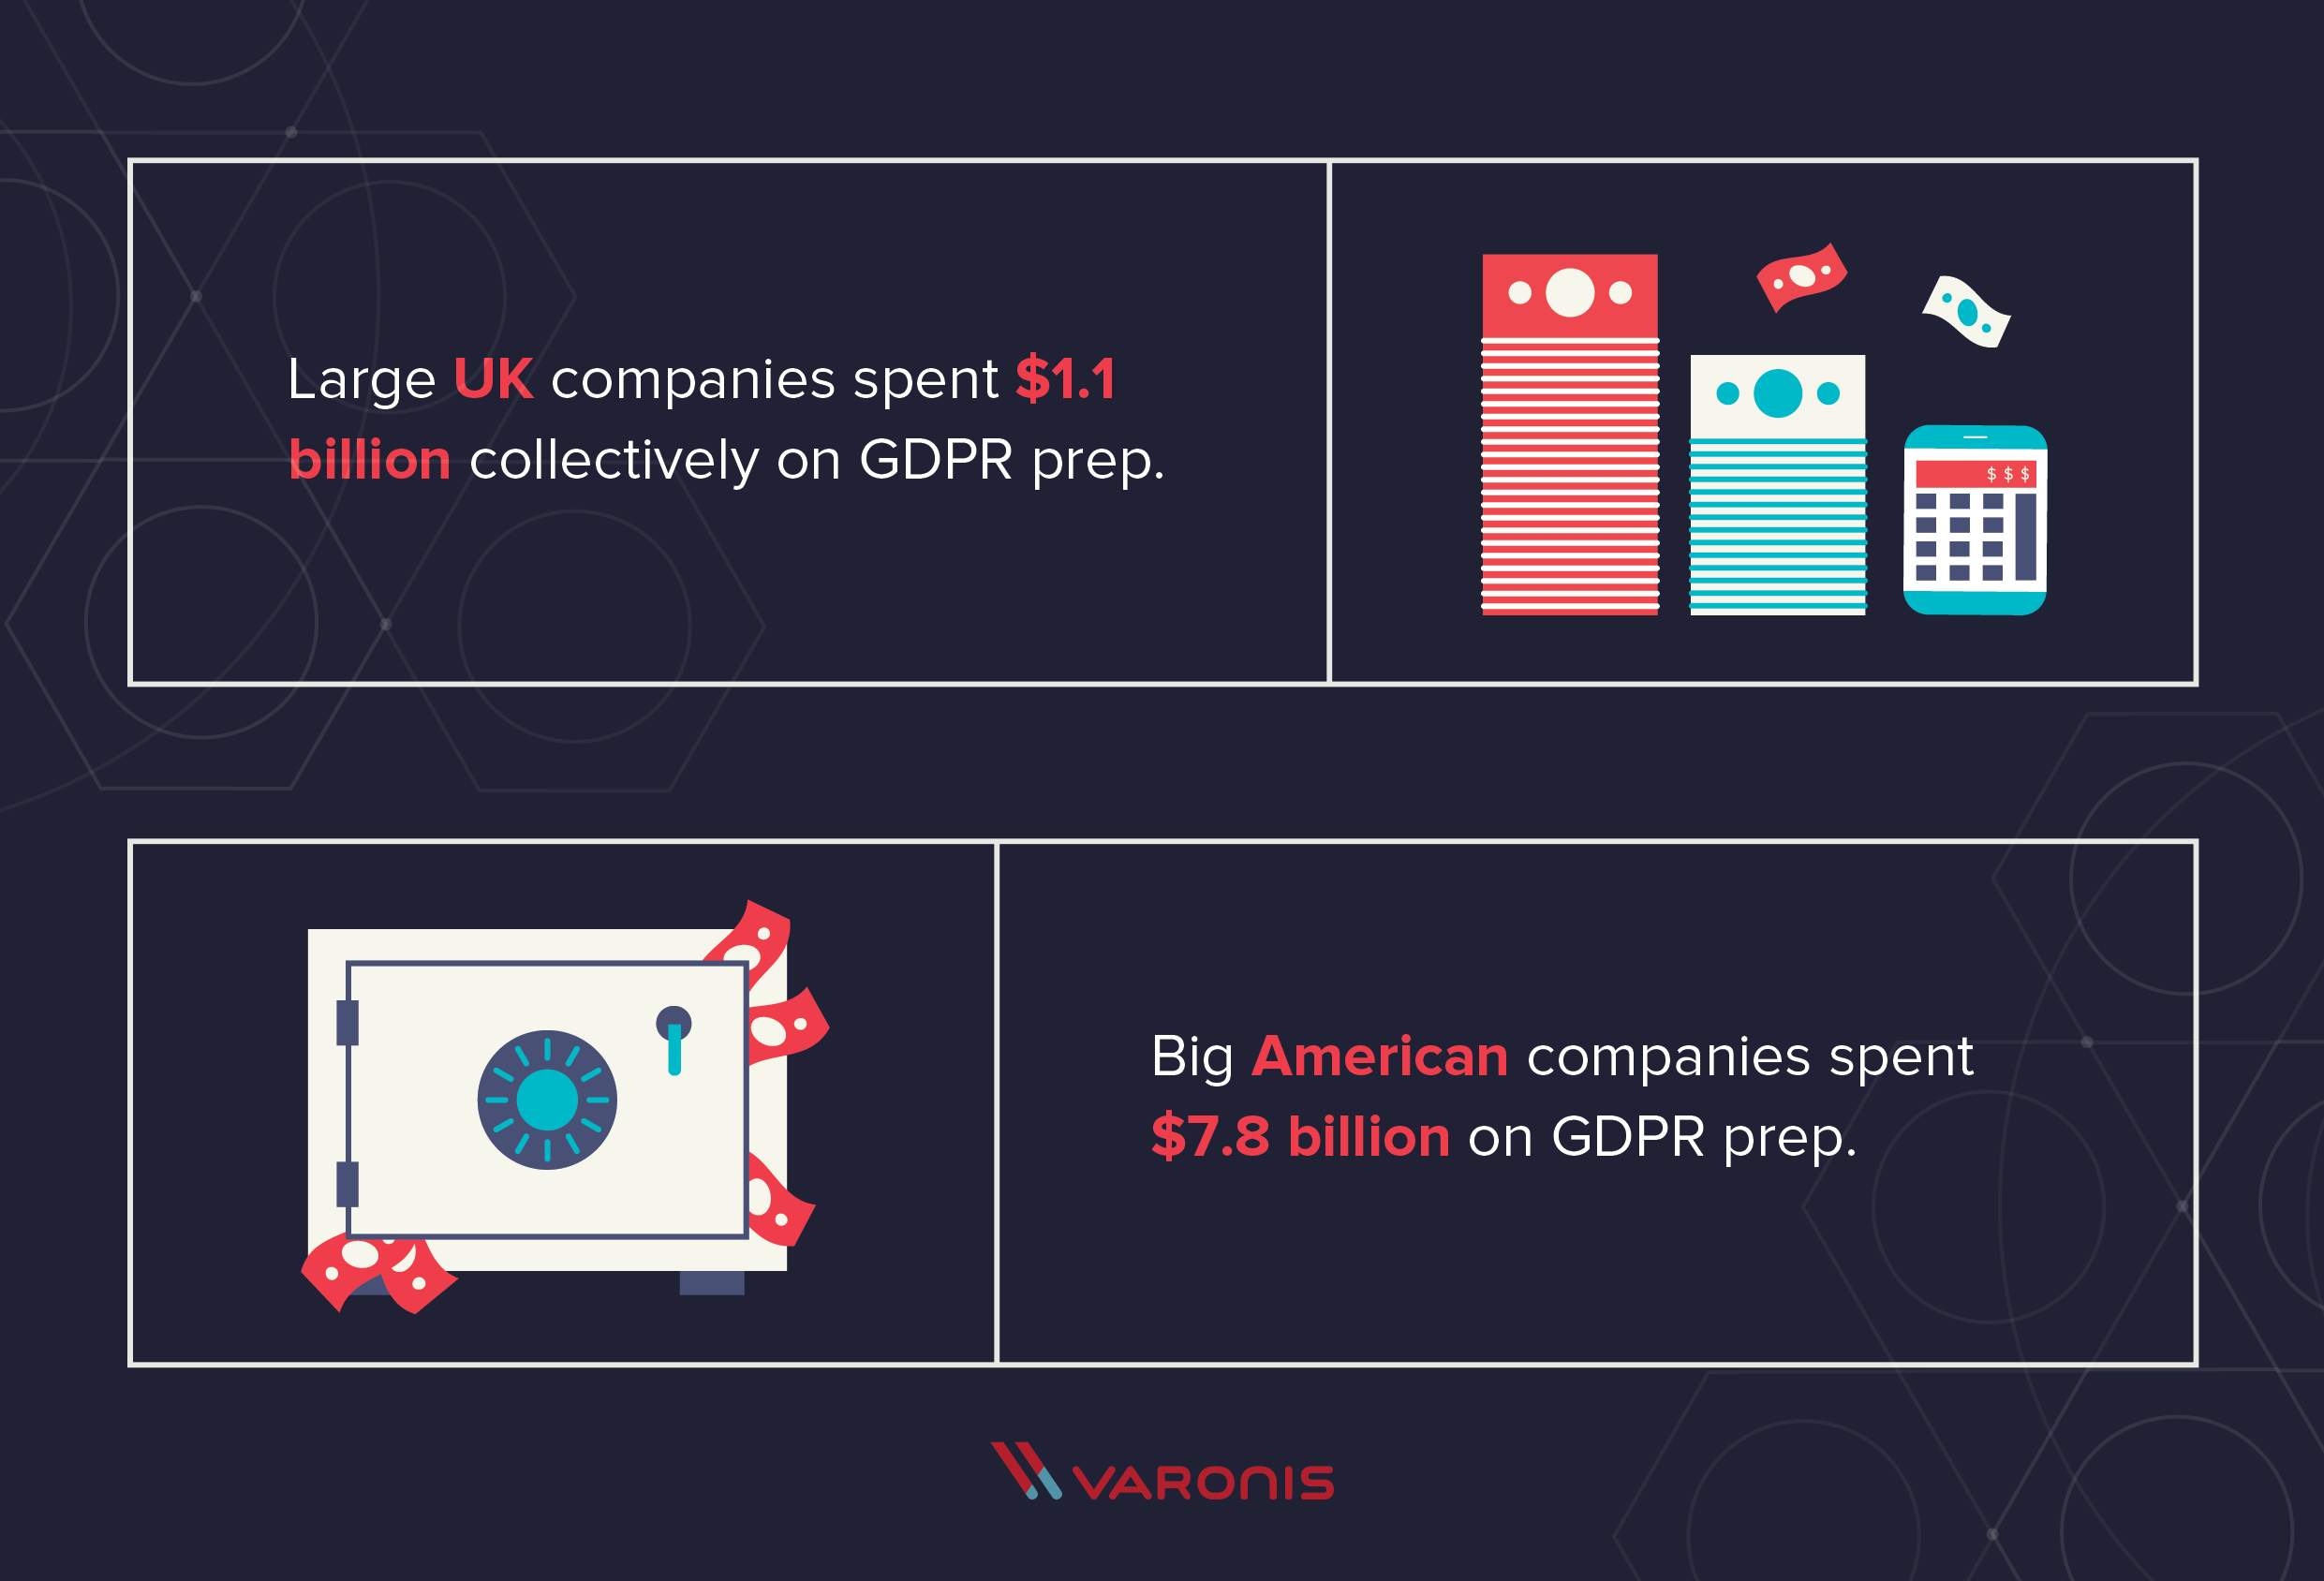 Large UK companies spent $1.1 billion collectively on GDPR prep. Big American companies spent $7.8 billion on GDPR prep.